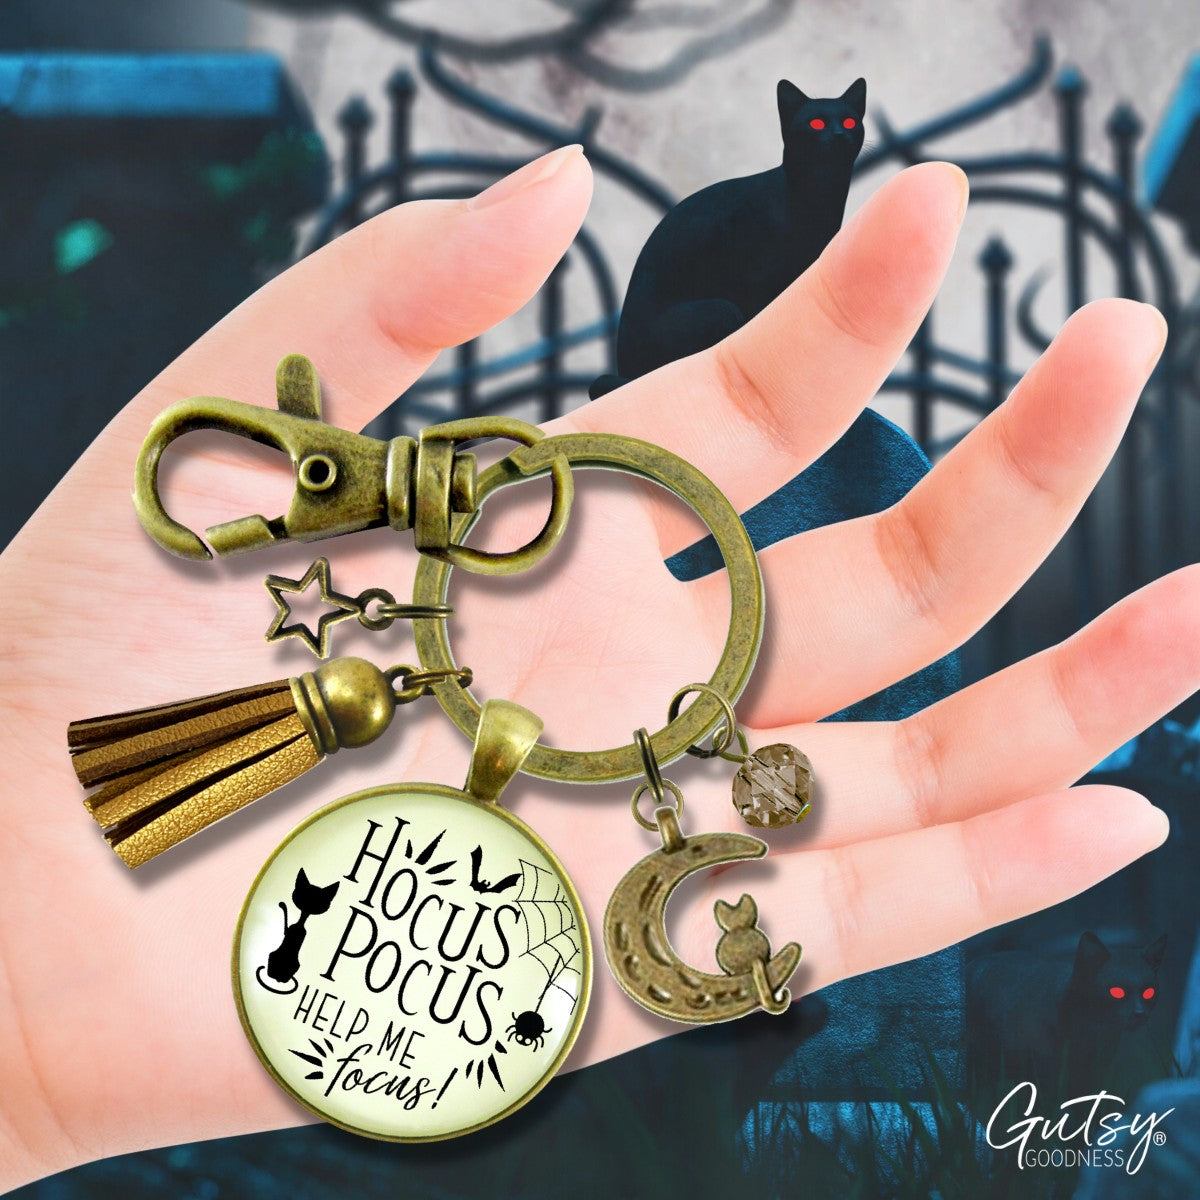 Hocus Pocus Keychain Help Me Focus Funny Halloween Spider Black Cat Jewelry for Women Costume Fashion Book Charm  Keychain - Women - Gutsy Goodness Handmade Jewelry